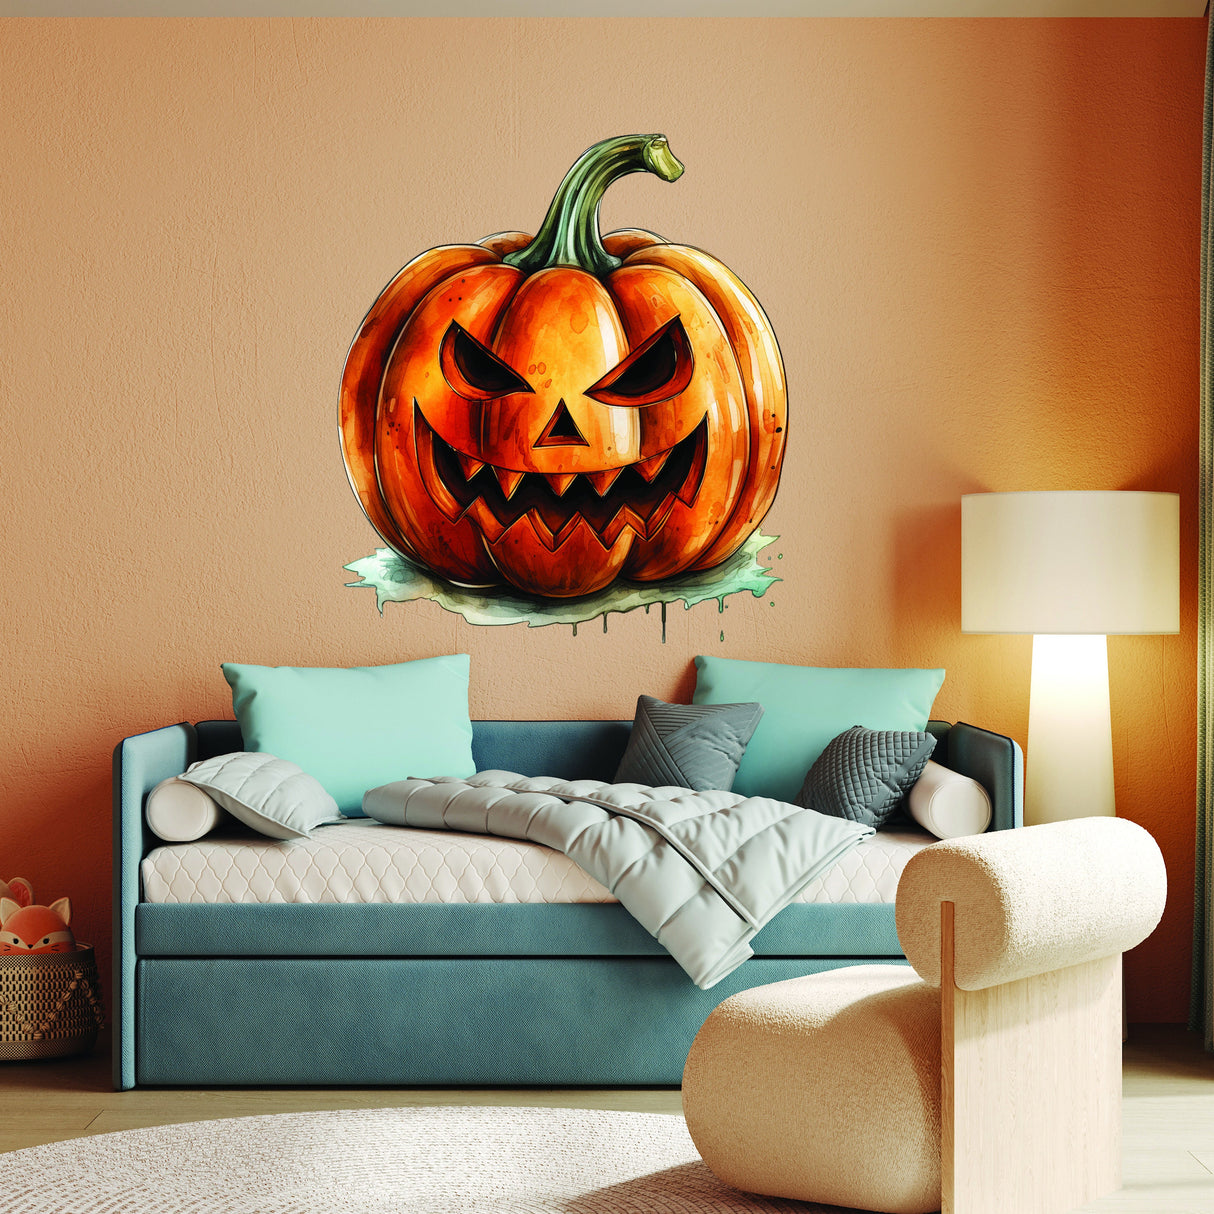 Laughing Pumpkin Decal - Halloween Scary Evil Face Vinyl Wall Sticker